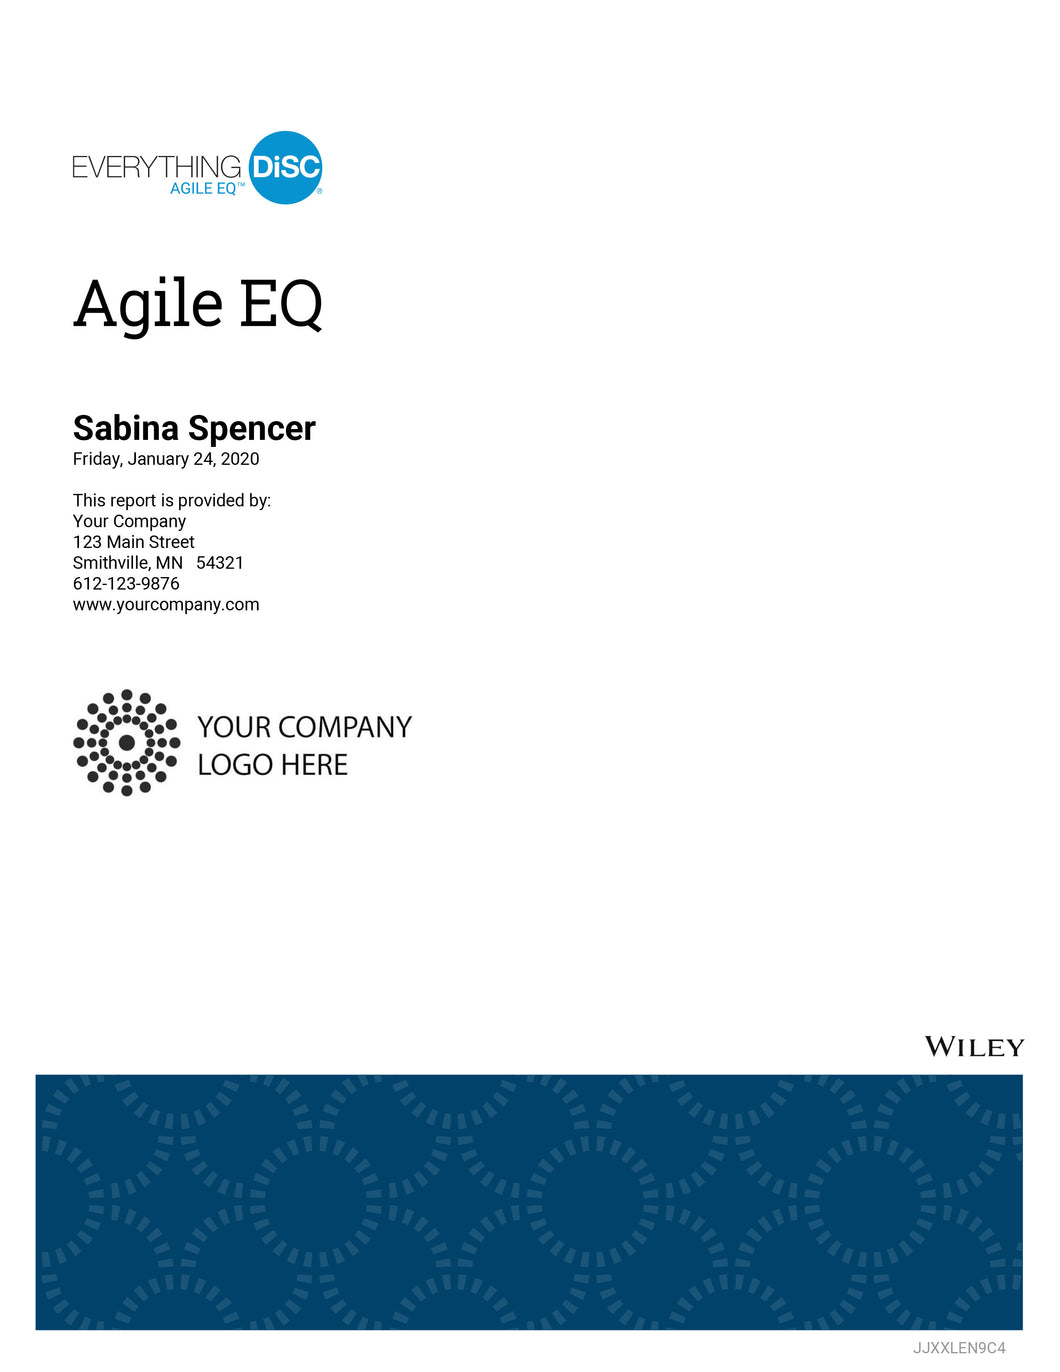 Everything DiSC® Agile EQ Profile